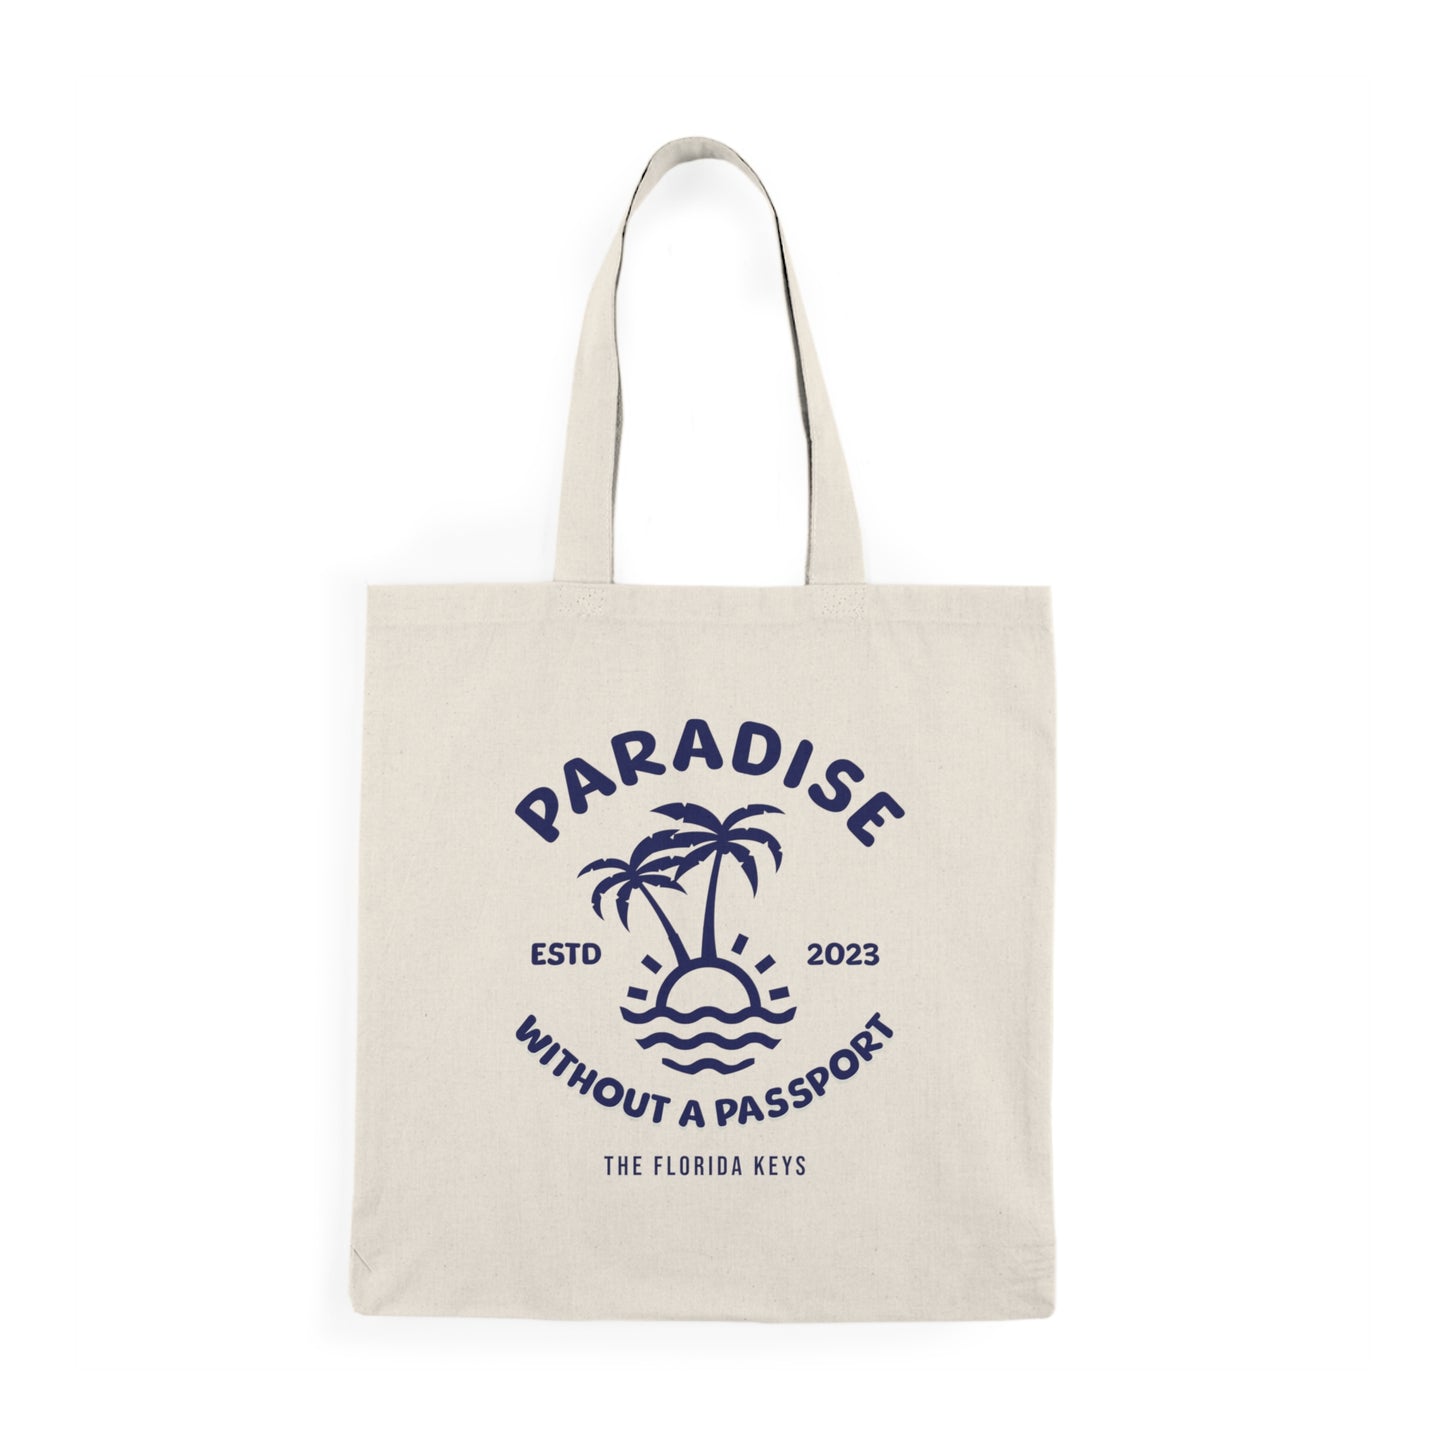 paradise without a passport tote bag - blue - florida keys tote bag